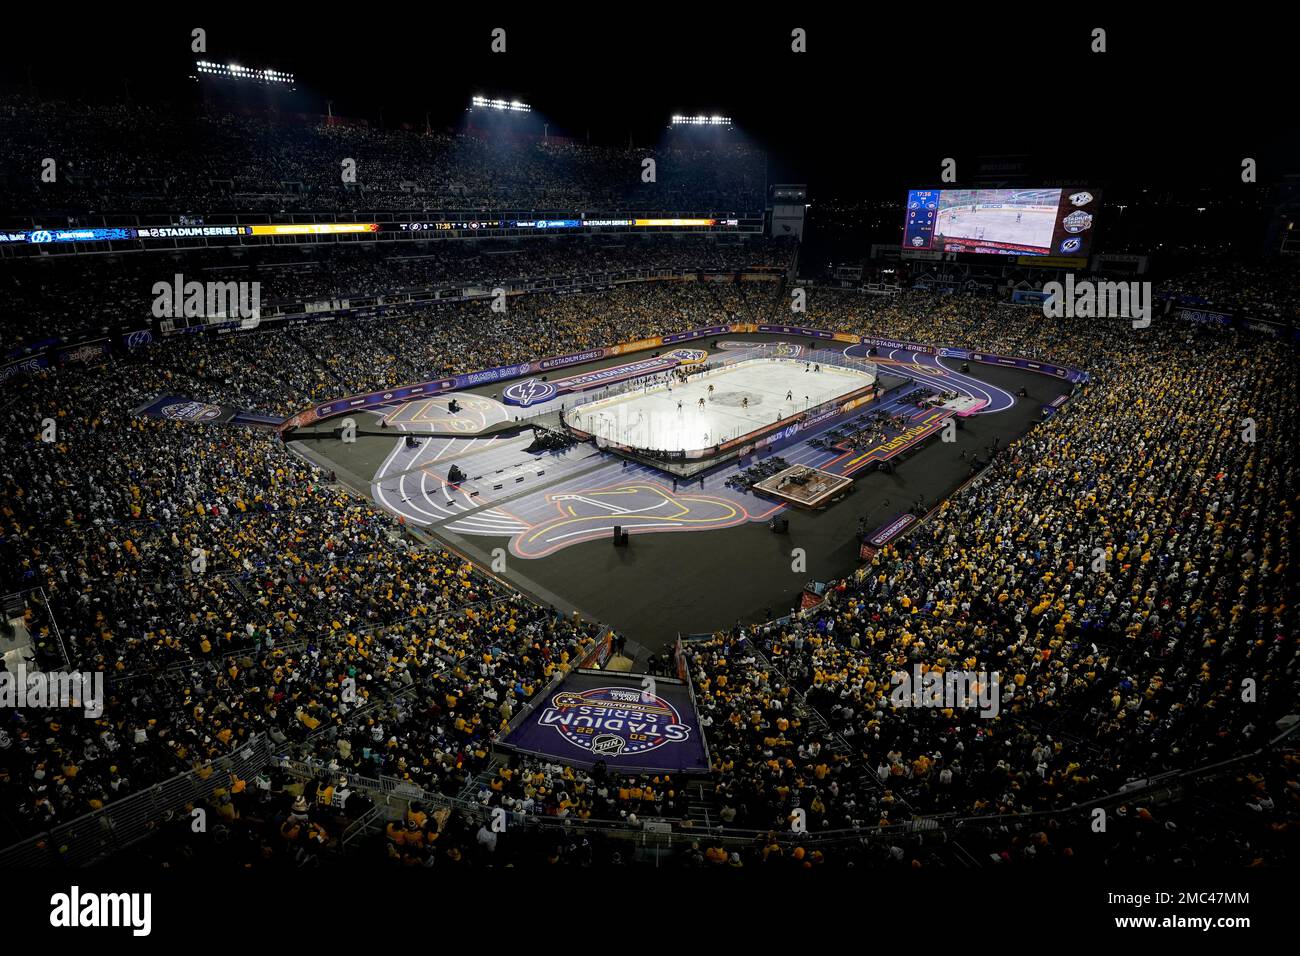 Nashville Predators vs Tampa Bay Lightning: How to watch NHL outdoor game